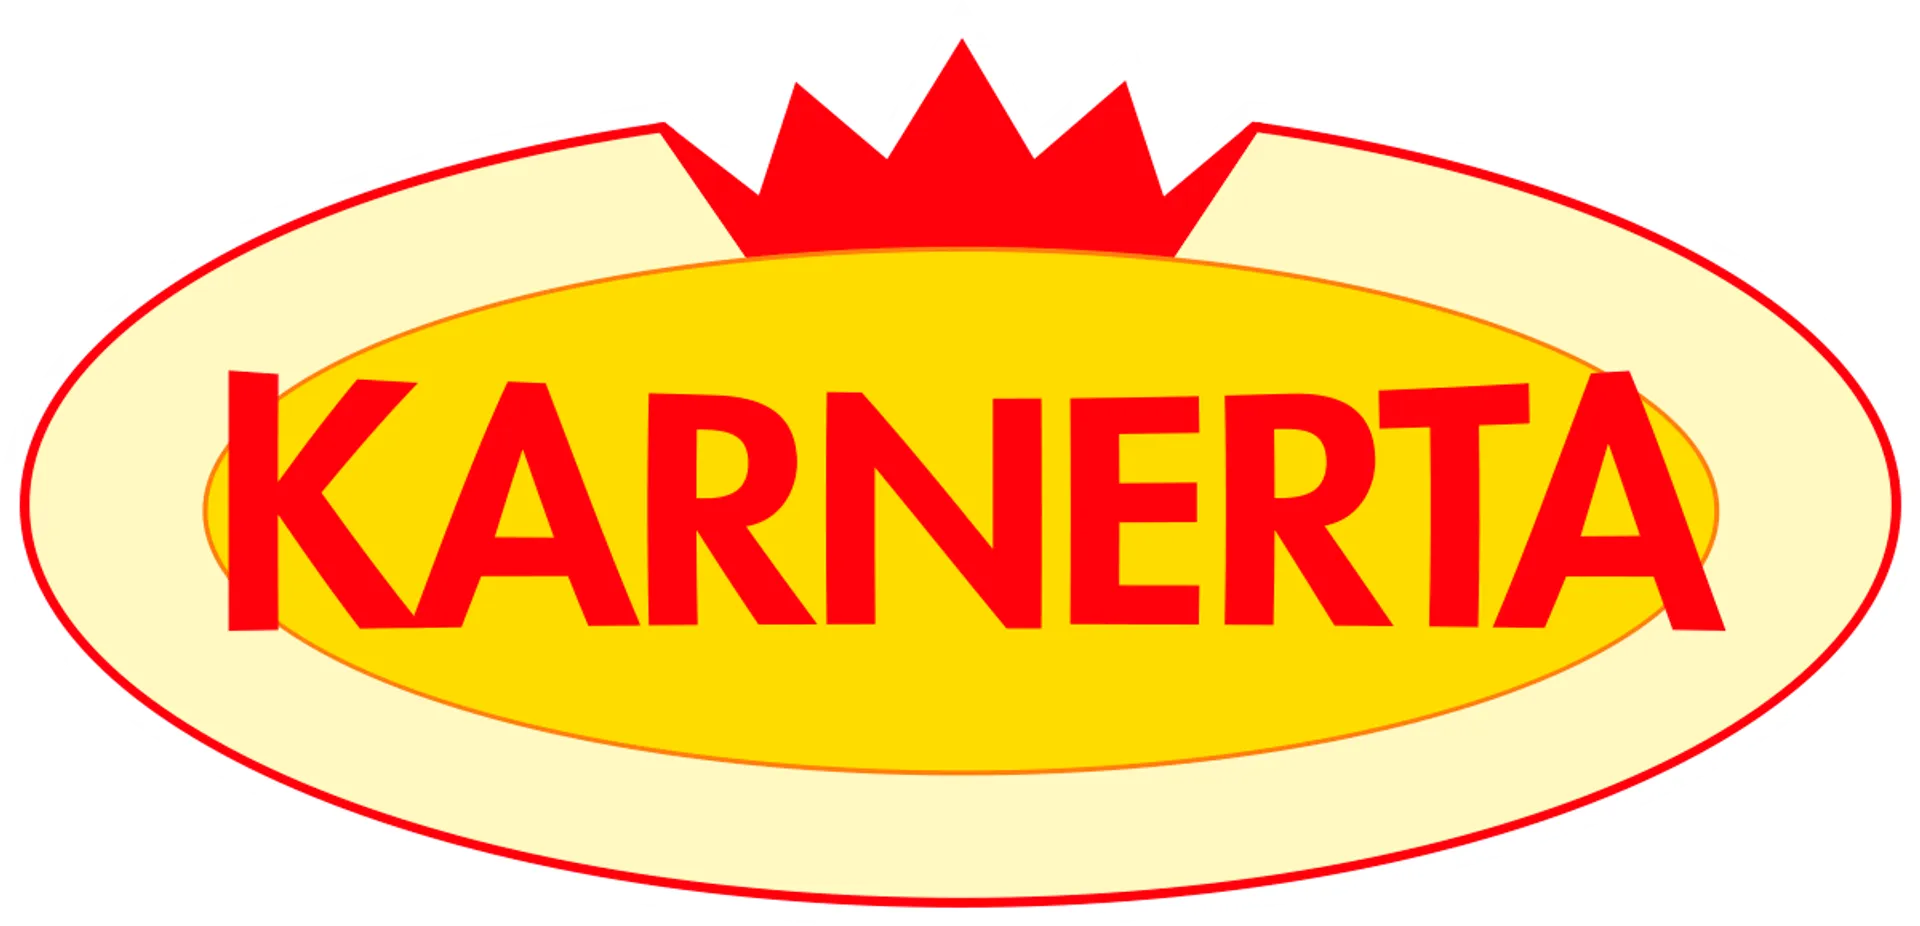 KARNERTA logo die aktuell Flugblatt